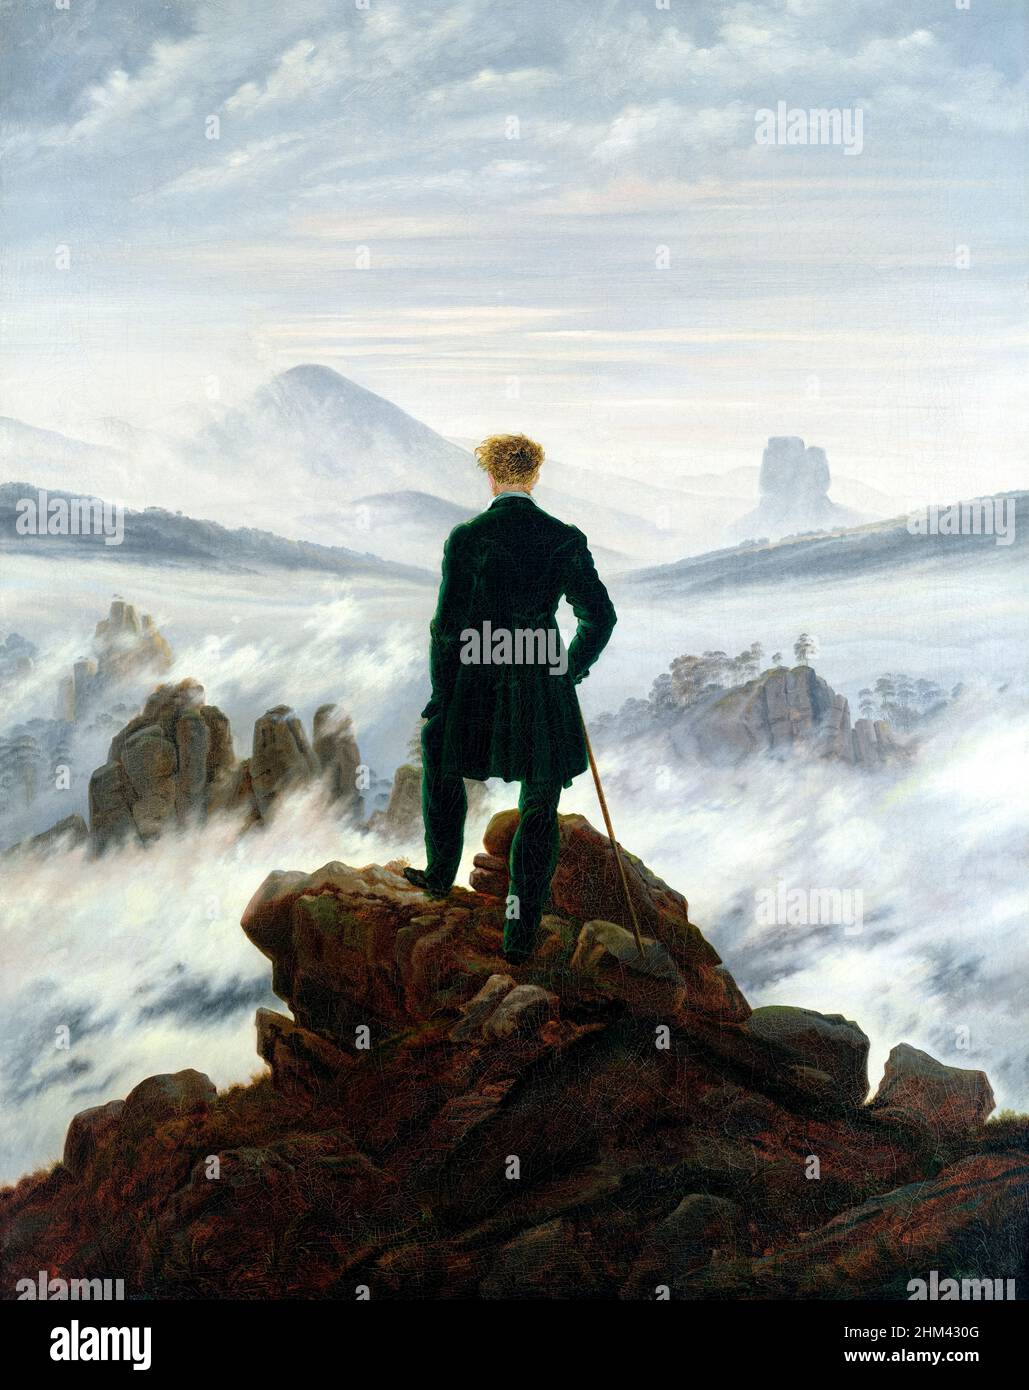 Wanderer au-dessus de la mer du brouillard [Der Wanderer über dem Nebelmeer] par le peintre allemand Caspar David Friedrich (1774-1840) peint vers 1818. Banque D'Images